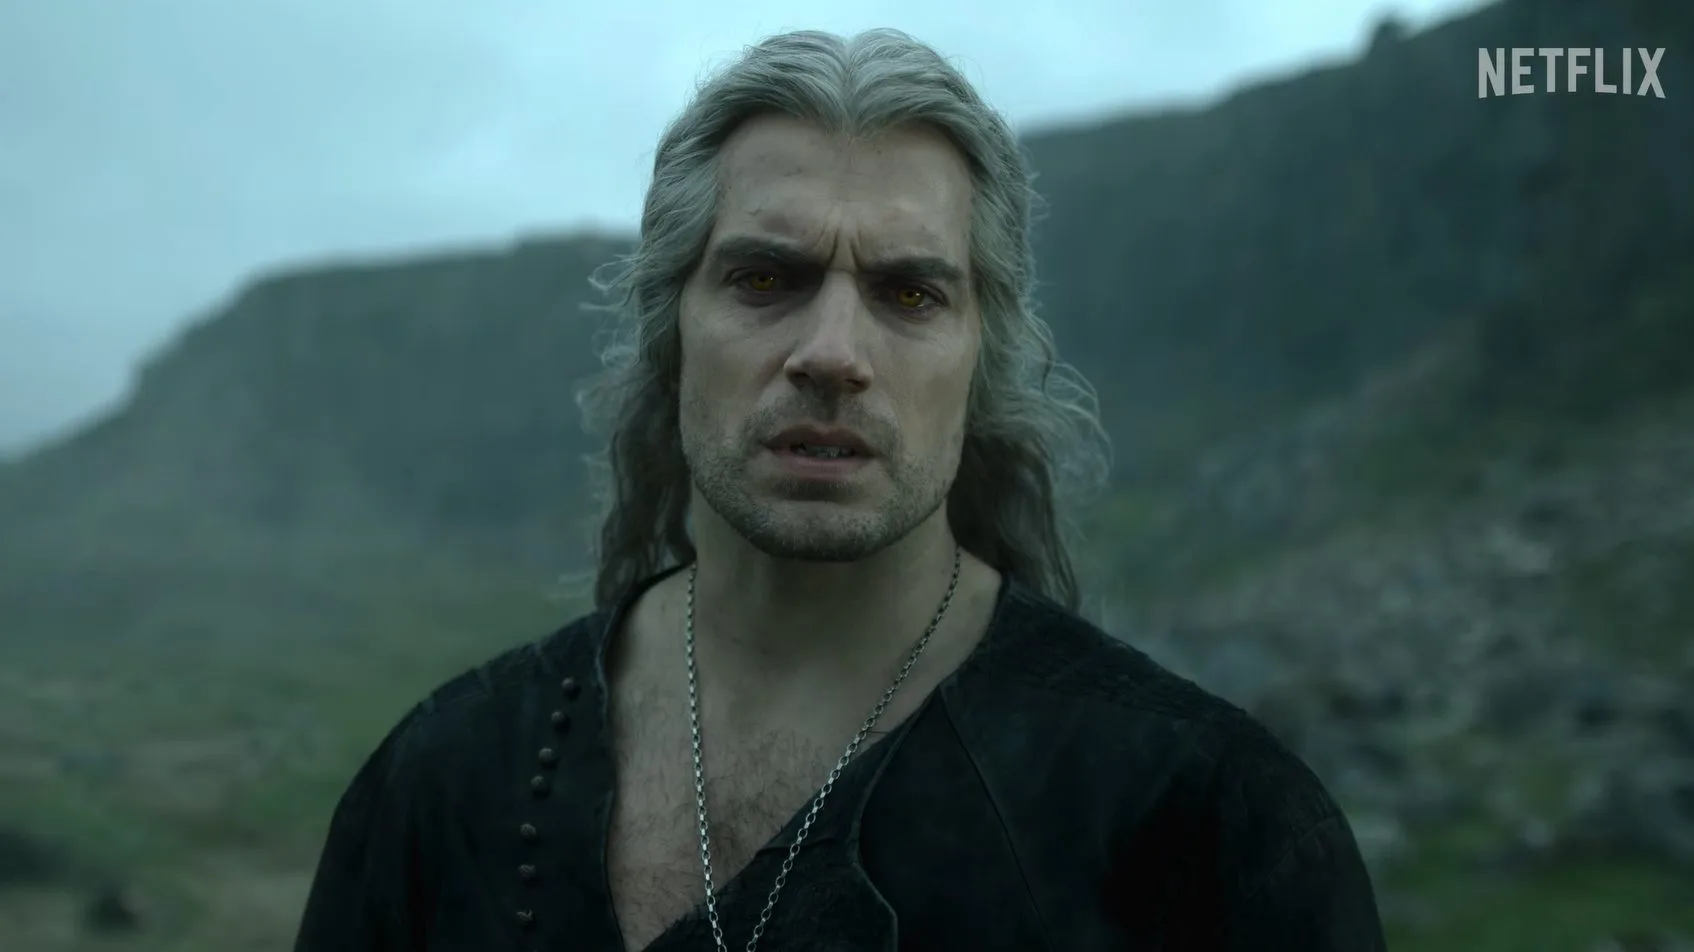 The Witcher Season 3 Part 2 Trailer Previews Henry Cavill’s Final Episodes as Geralt